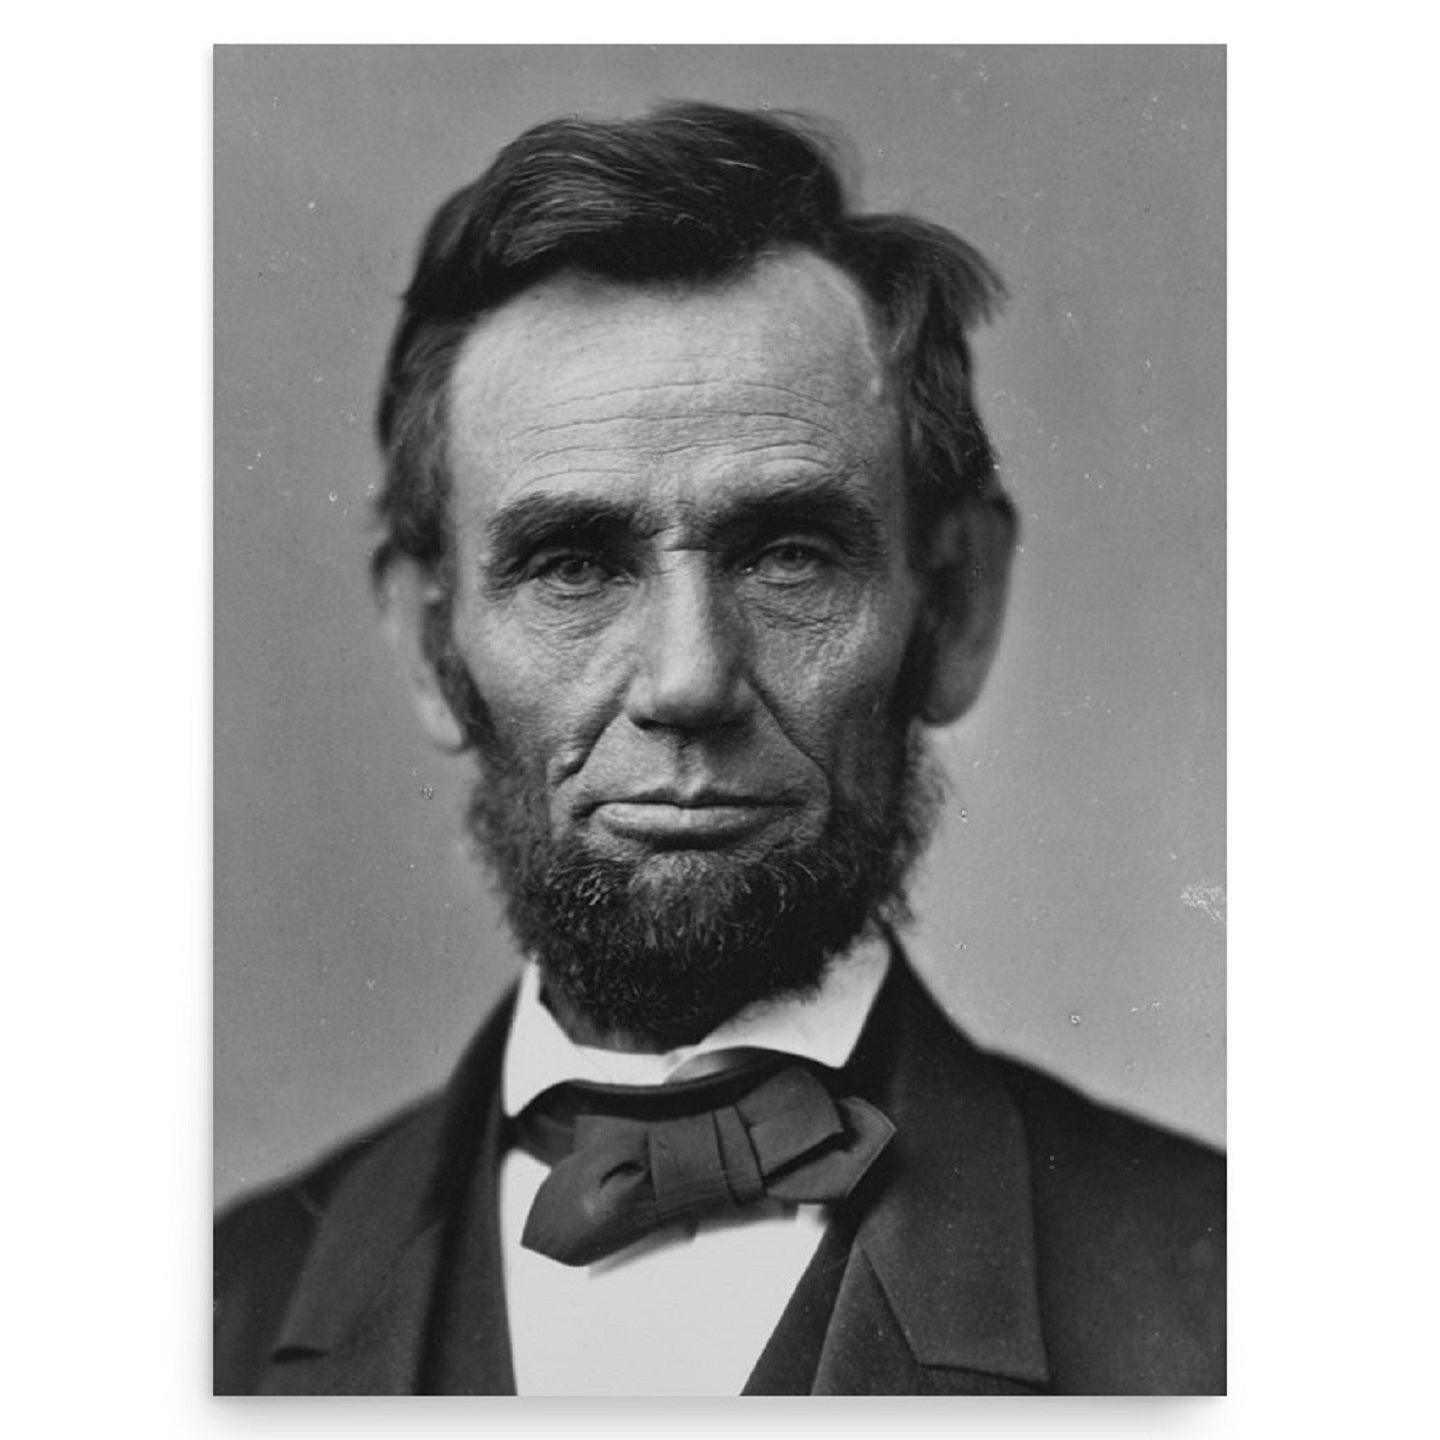 A rectangular Abraham Lincoln poster print on a plain backdrop.